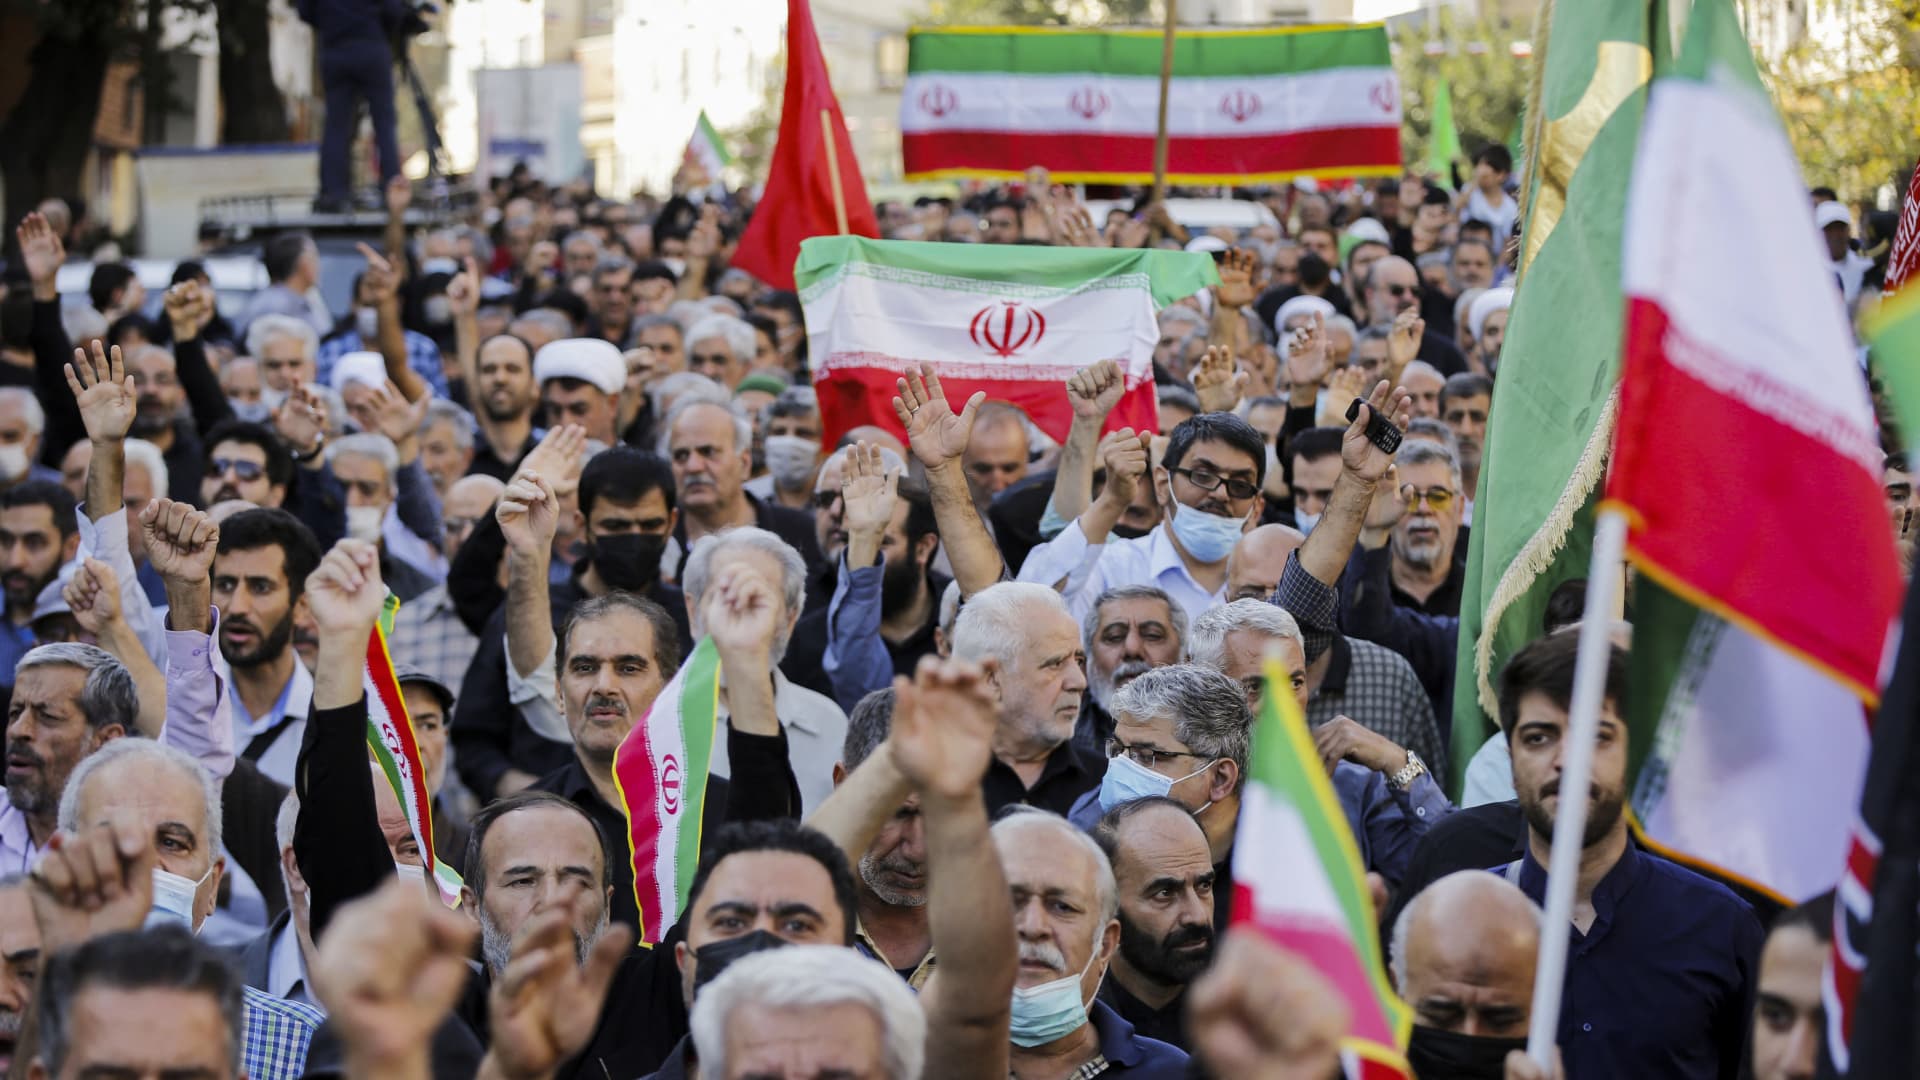 No hope for the future: Economic struggles add fuel to Iran’s protests